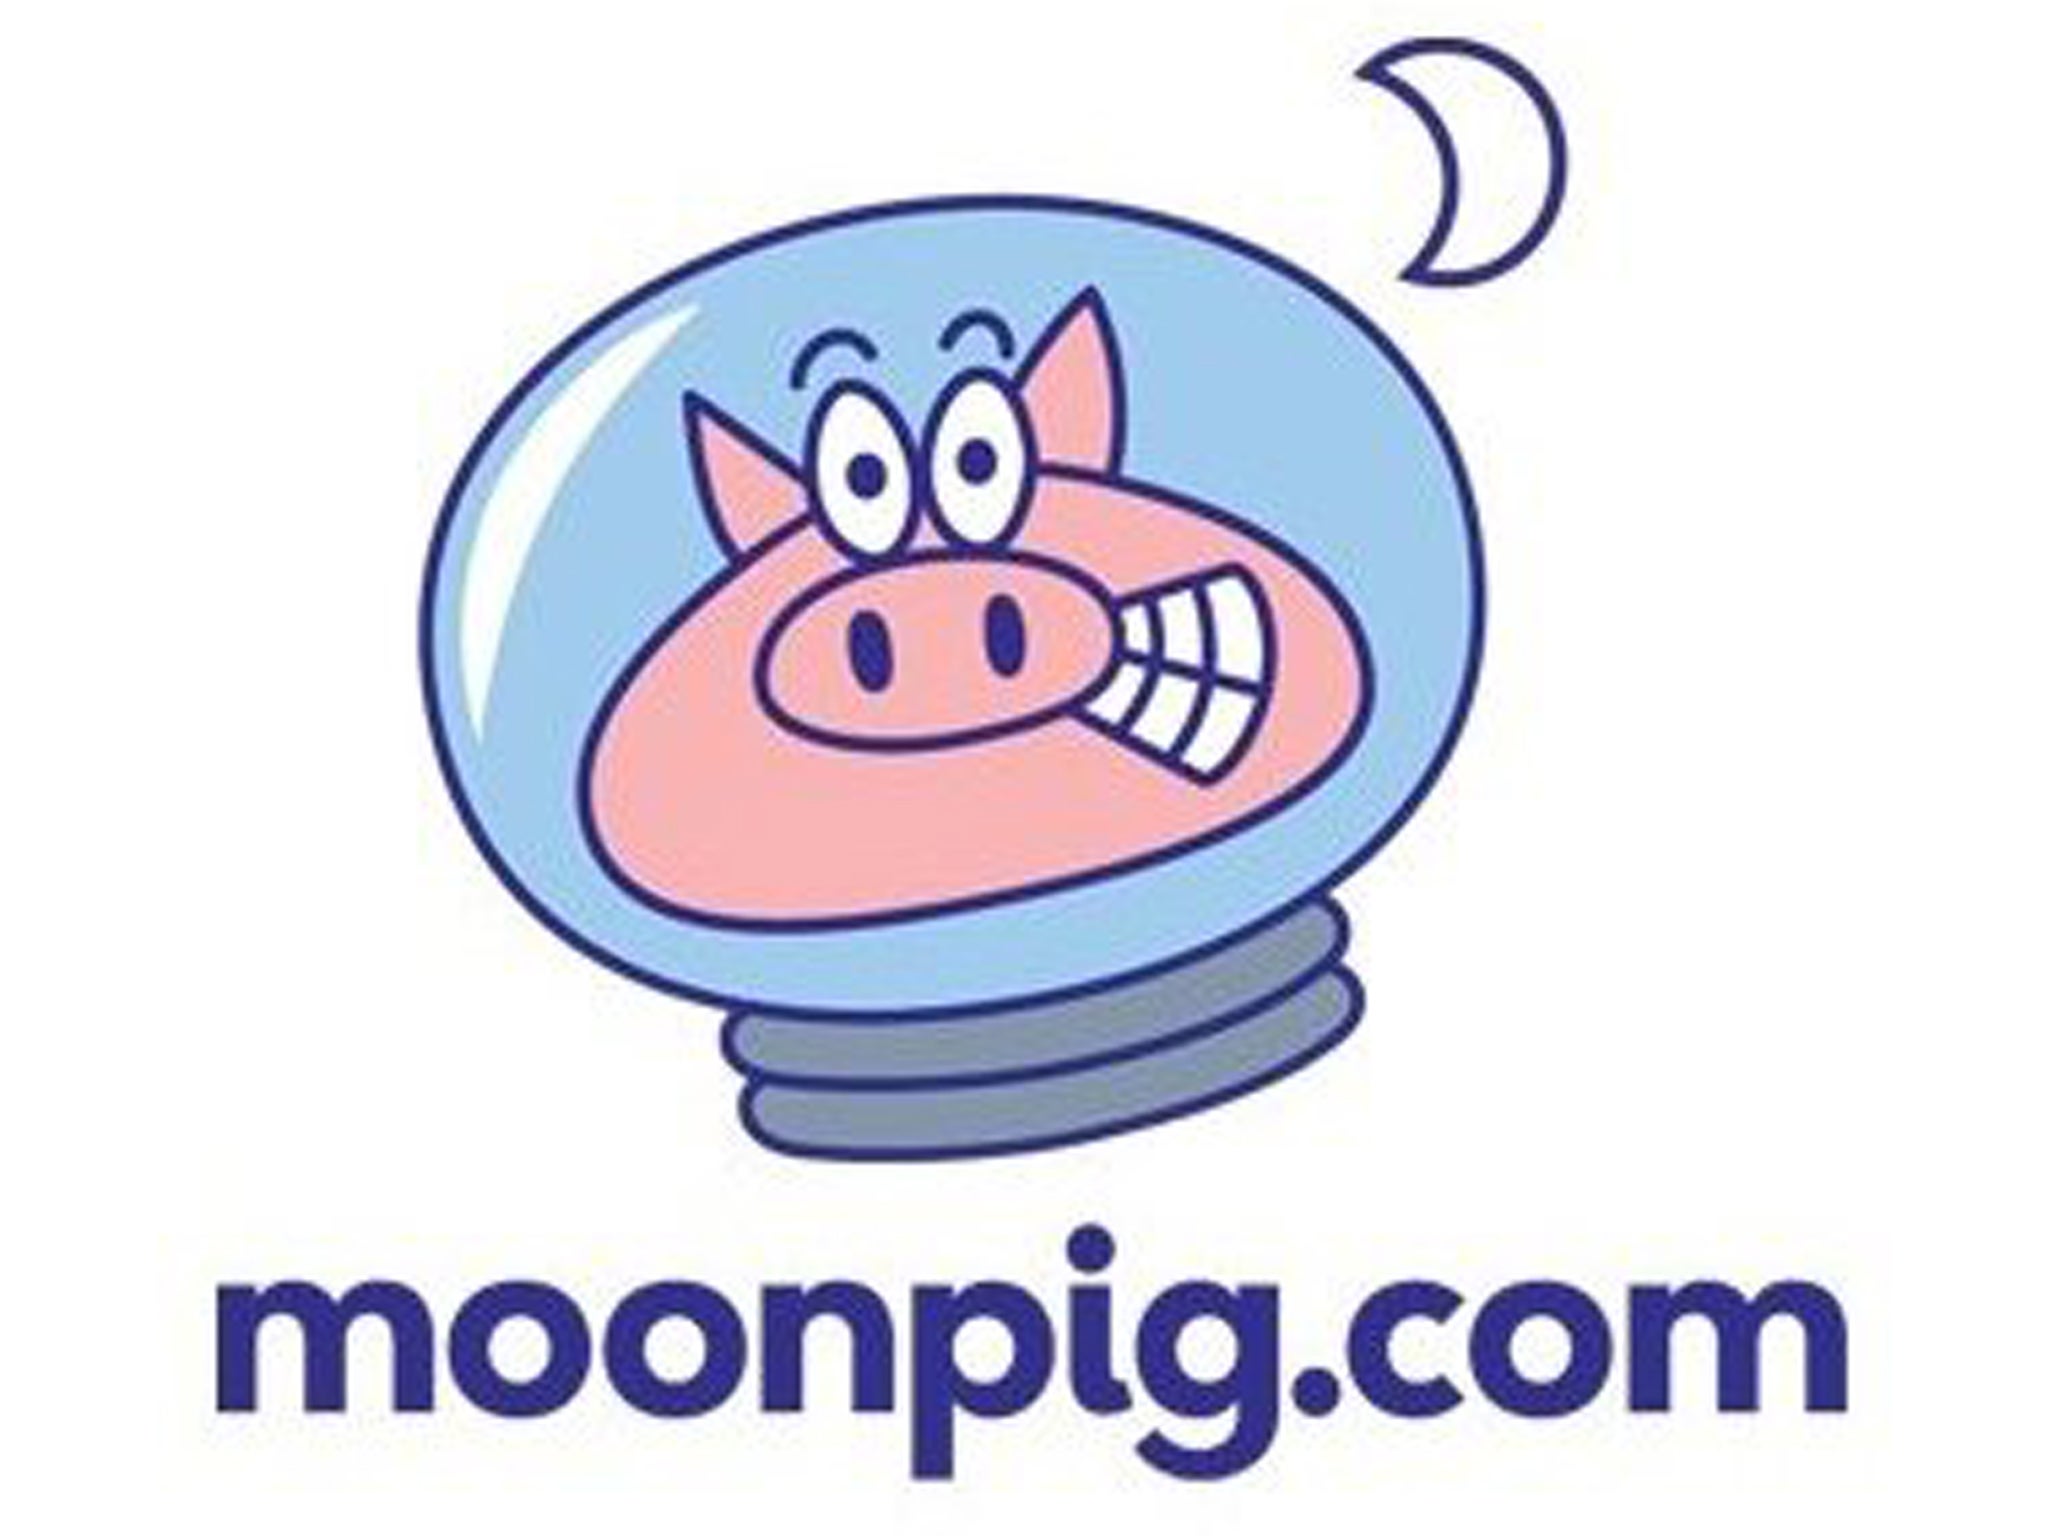 The Moonpig logo